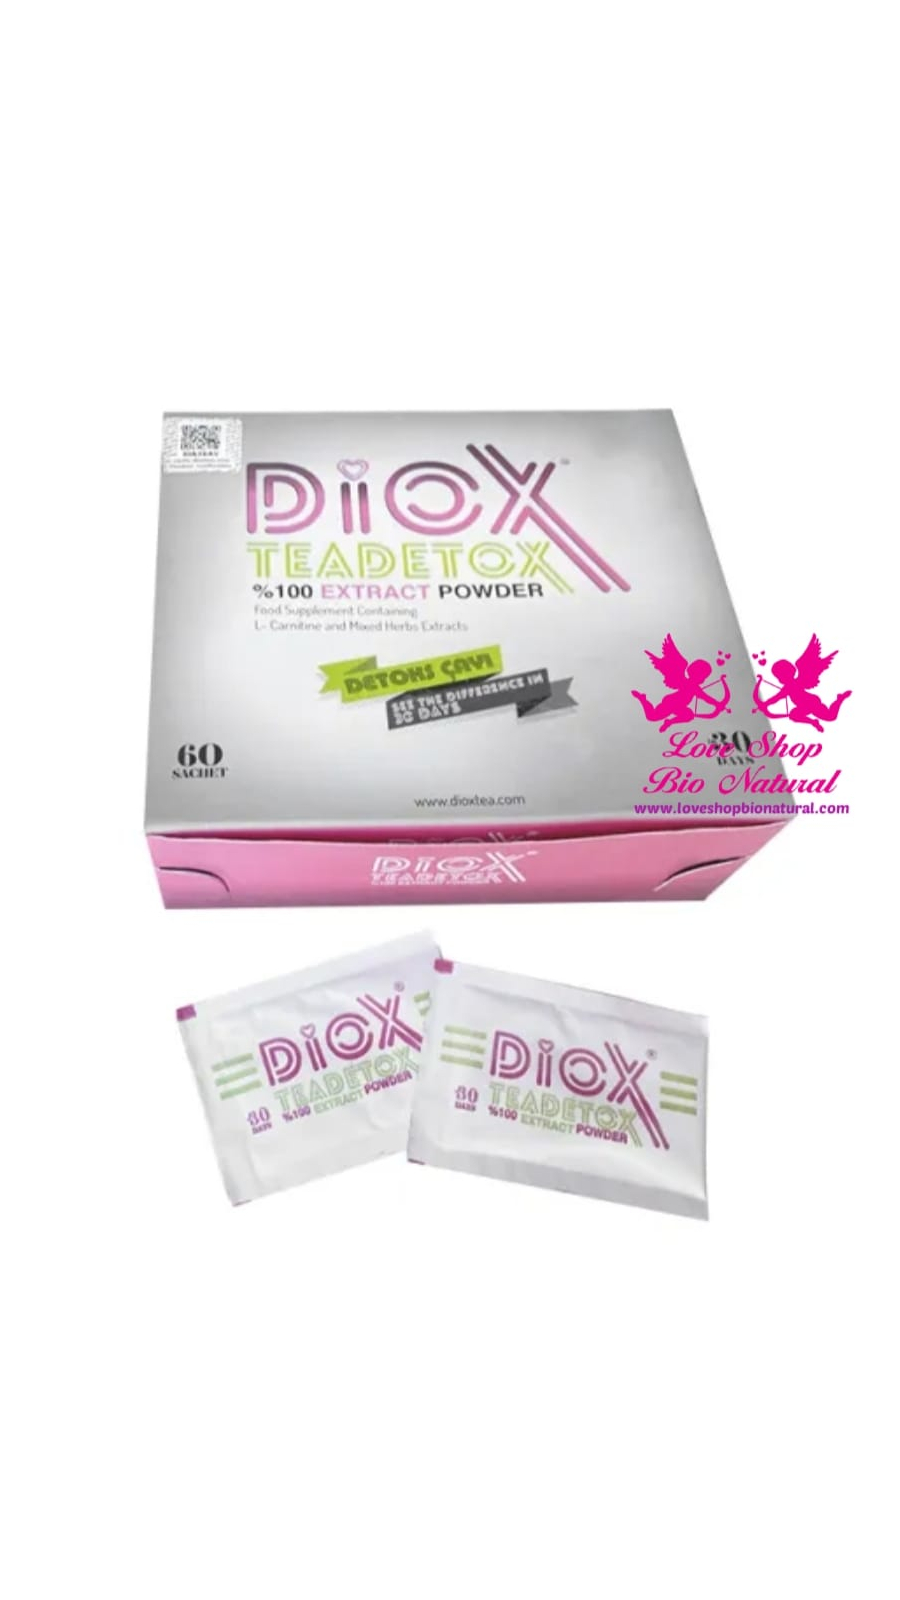 ceai detox diox tradetox extract powder 8689 2 17071630154322 1